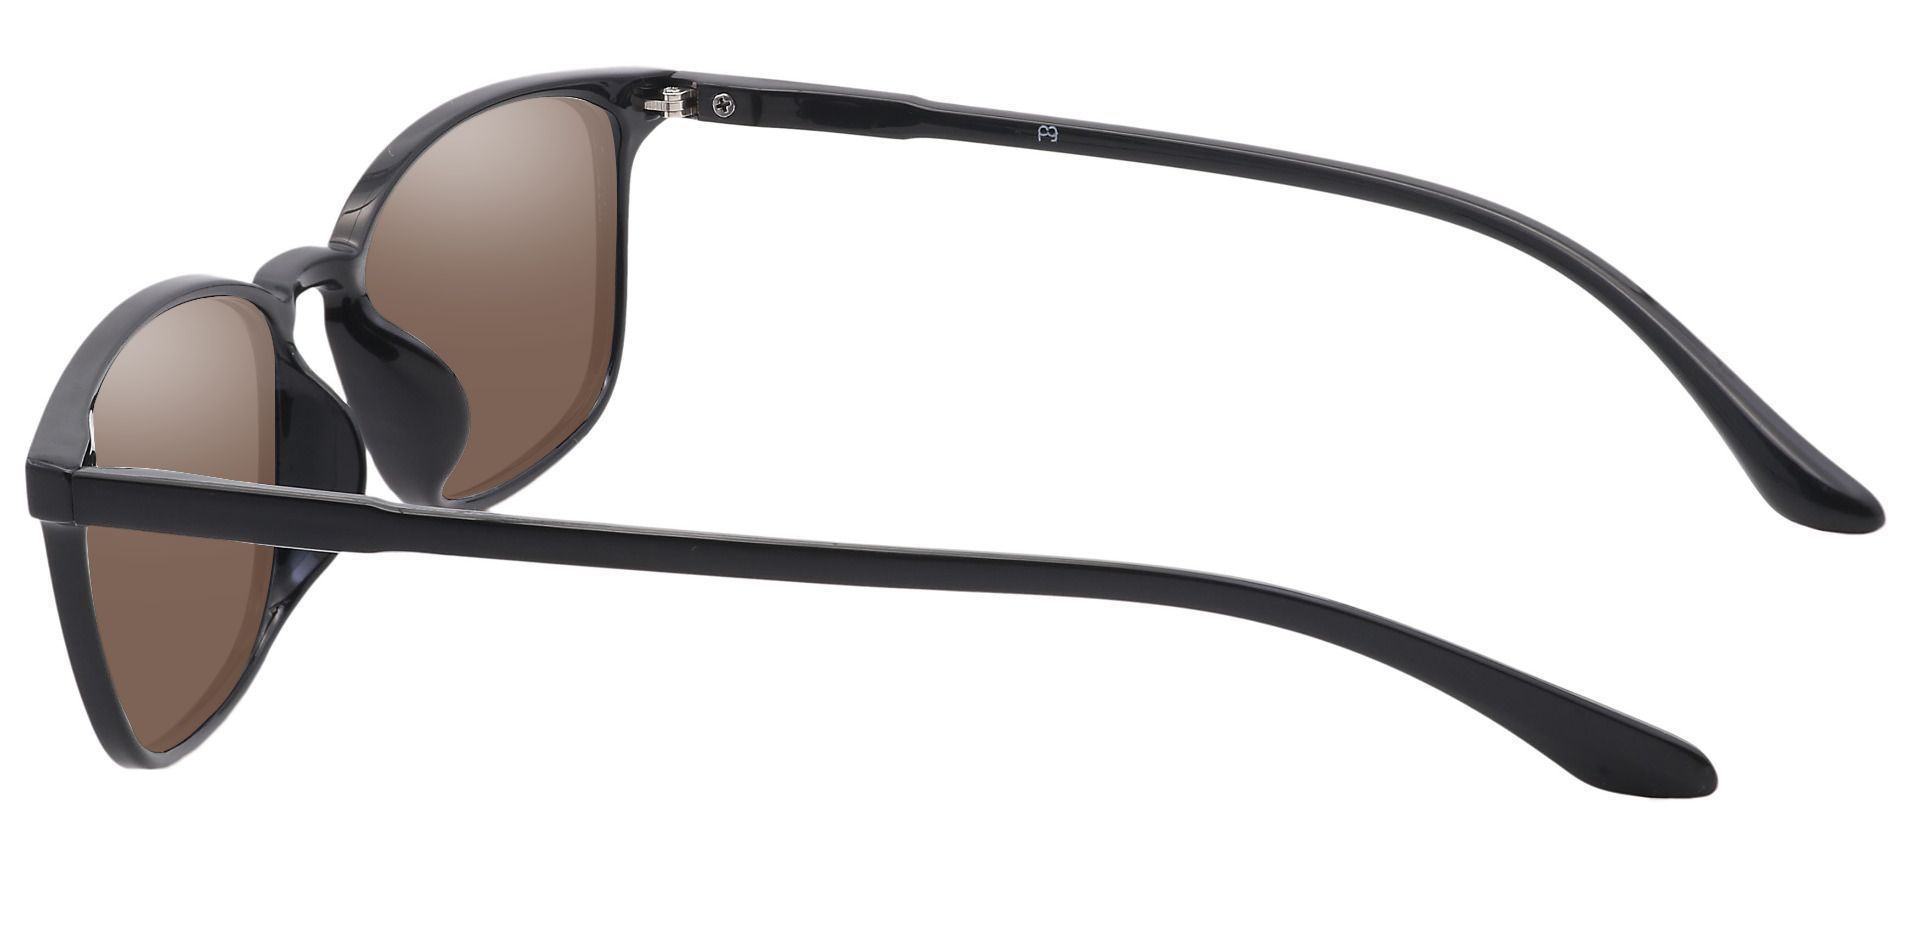 Cabo Oval Prescription Sunglasses -  Black Frame With Brown Lenses